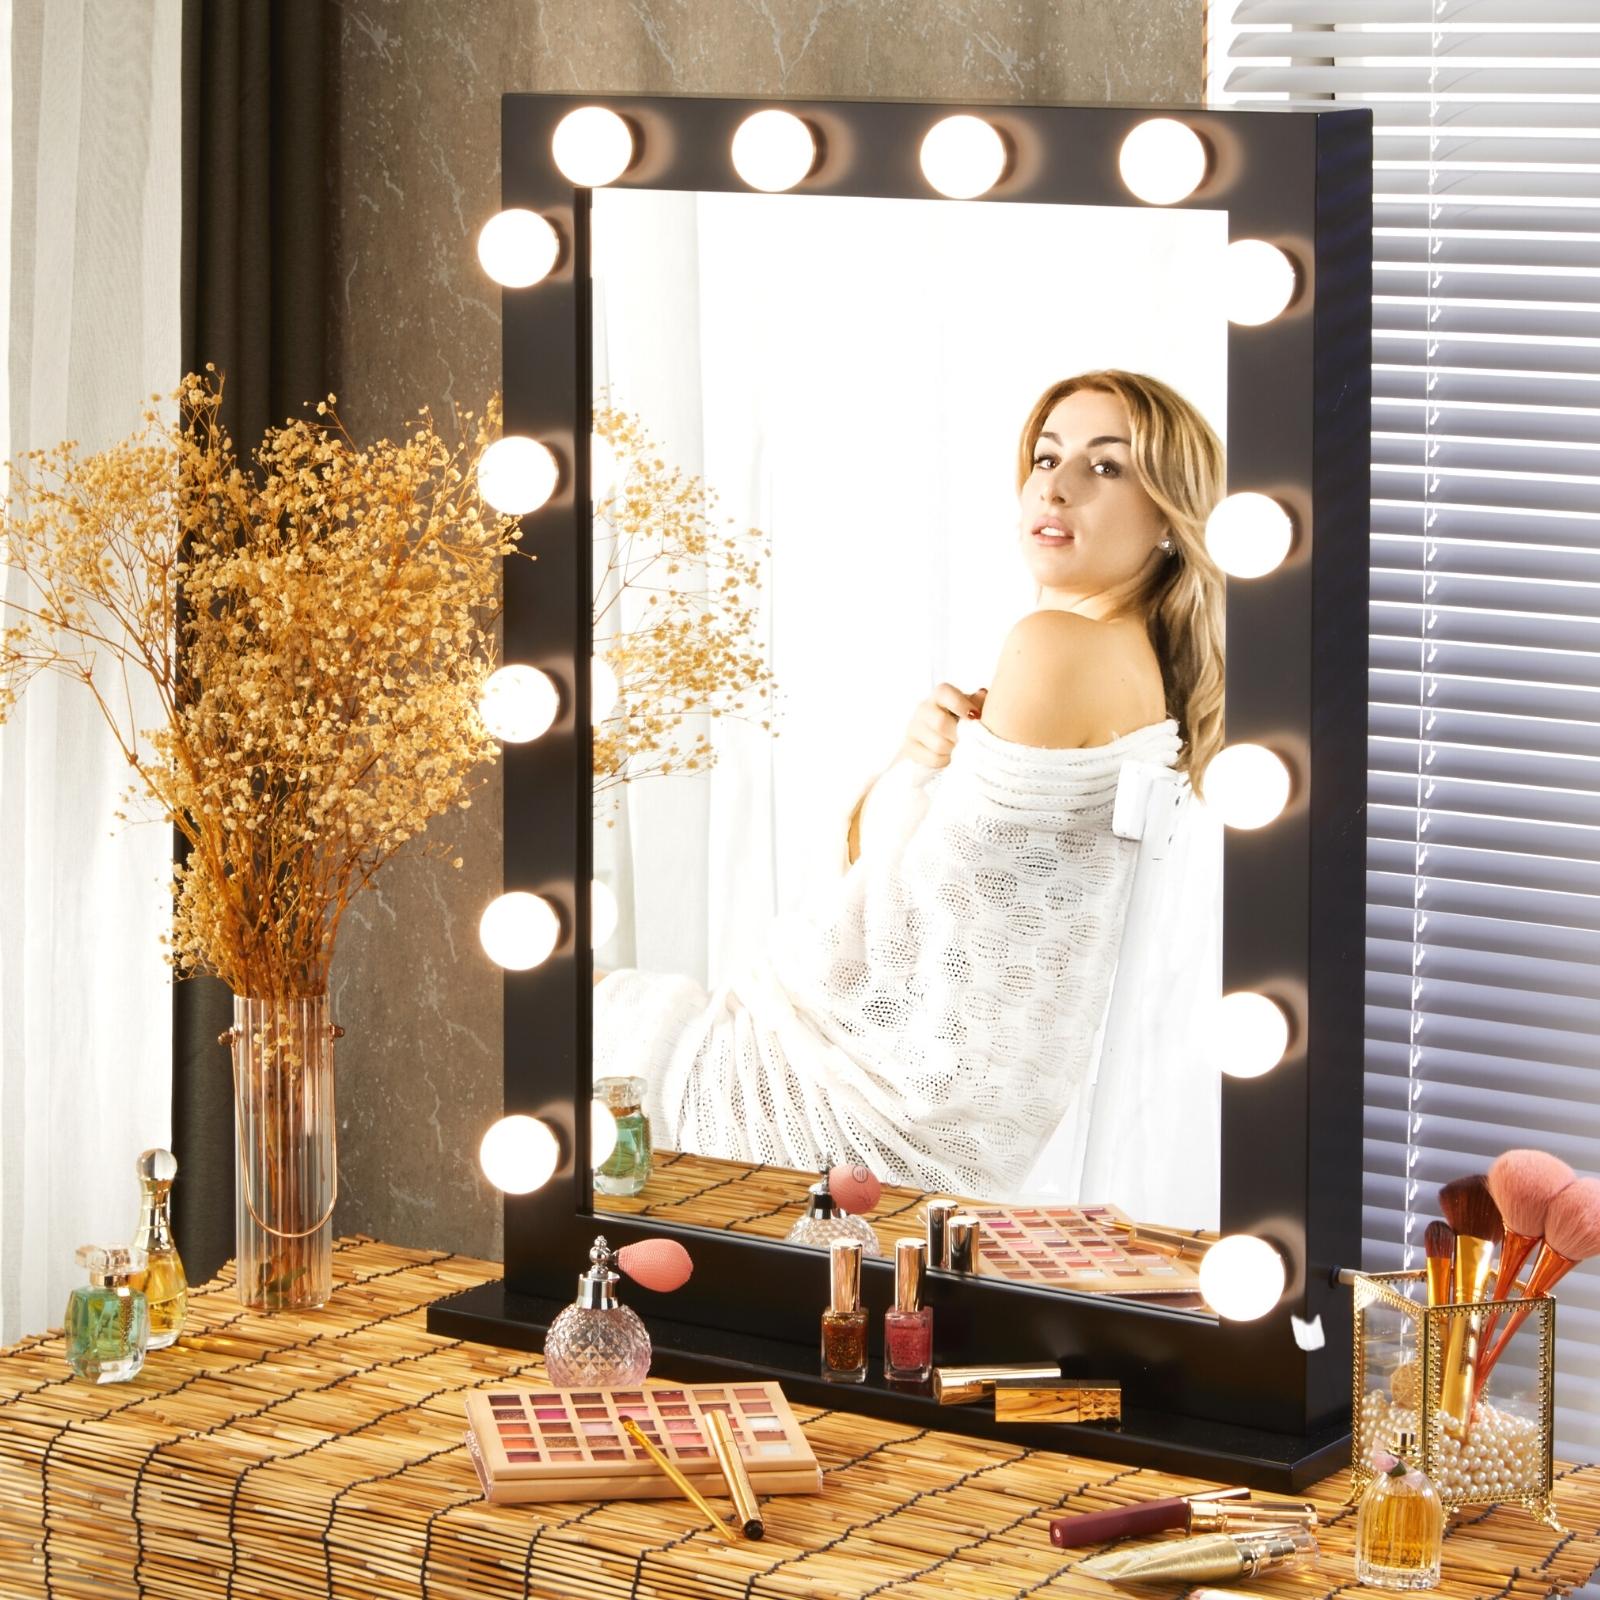 Luxfurni | Hollywood Mirror | Professional Hollywood Max1 Pro LED Vanity Mirror - Black